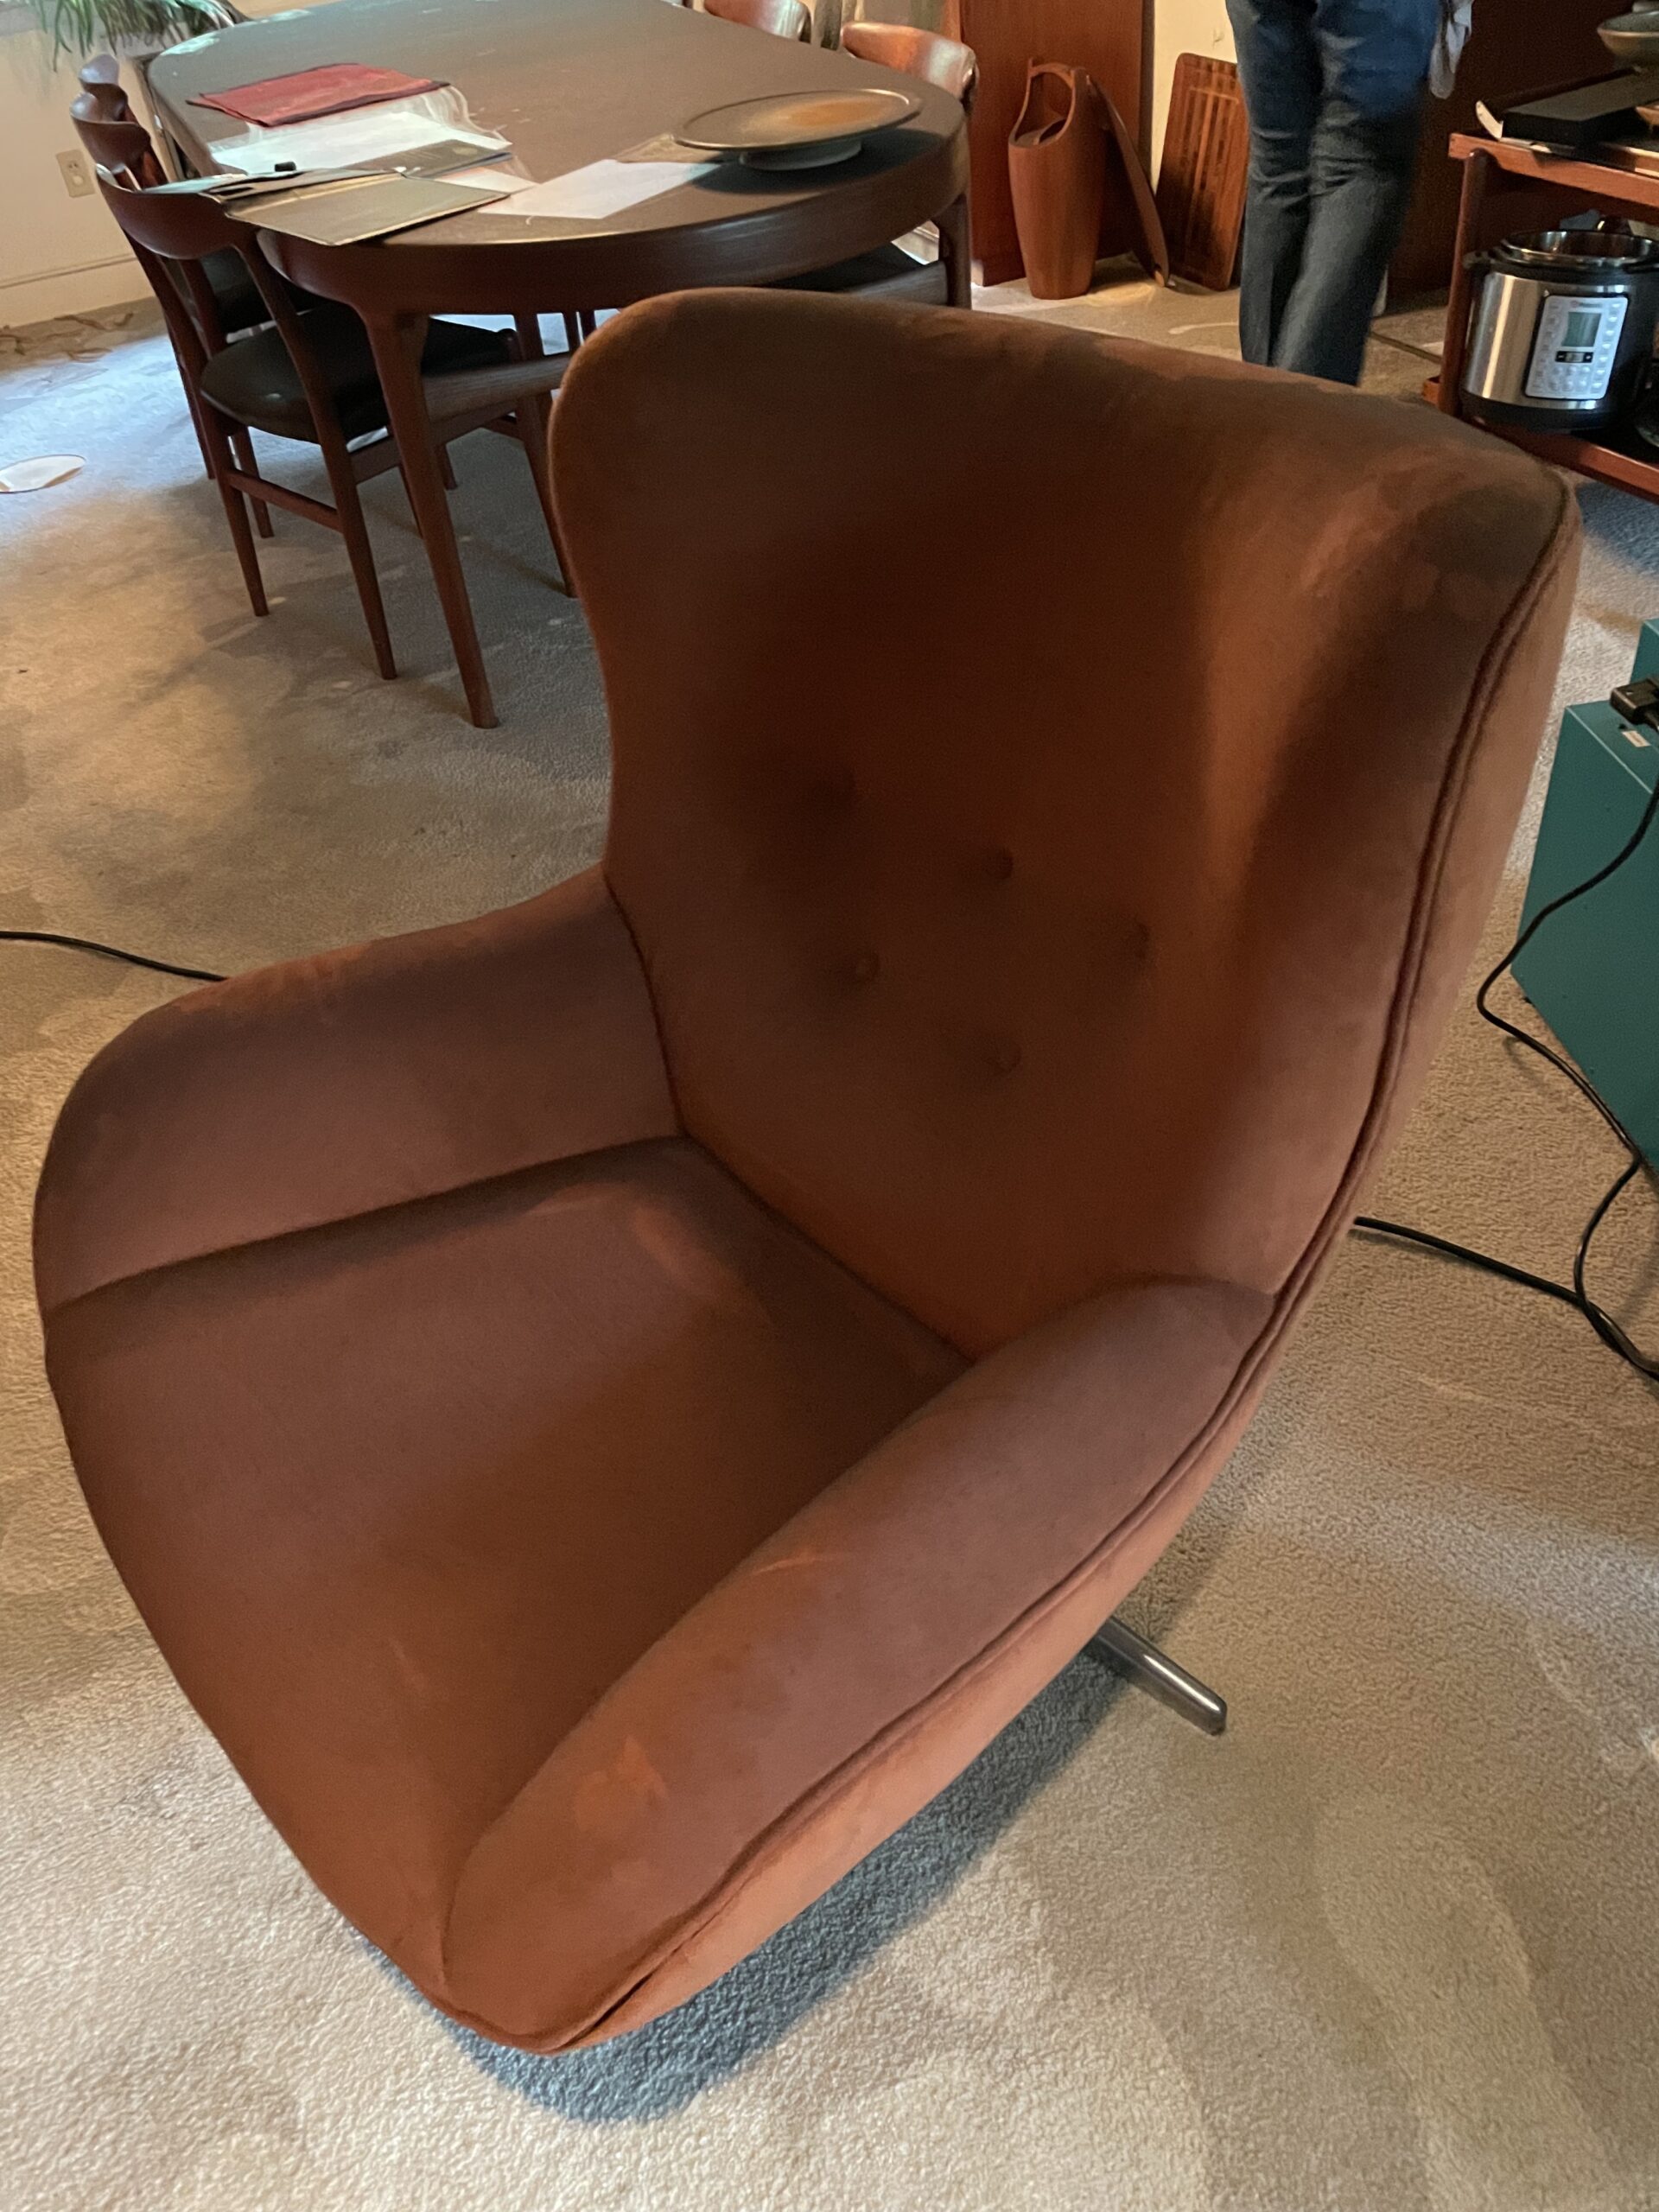 Orange chair - before